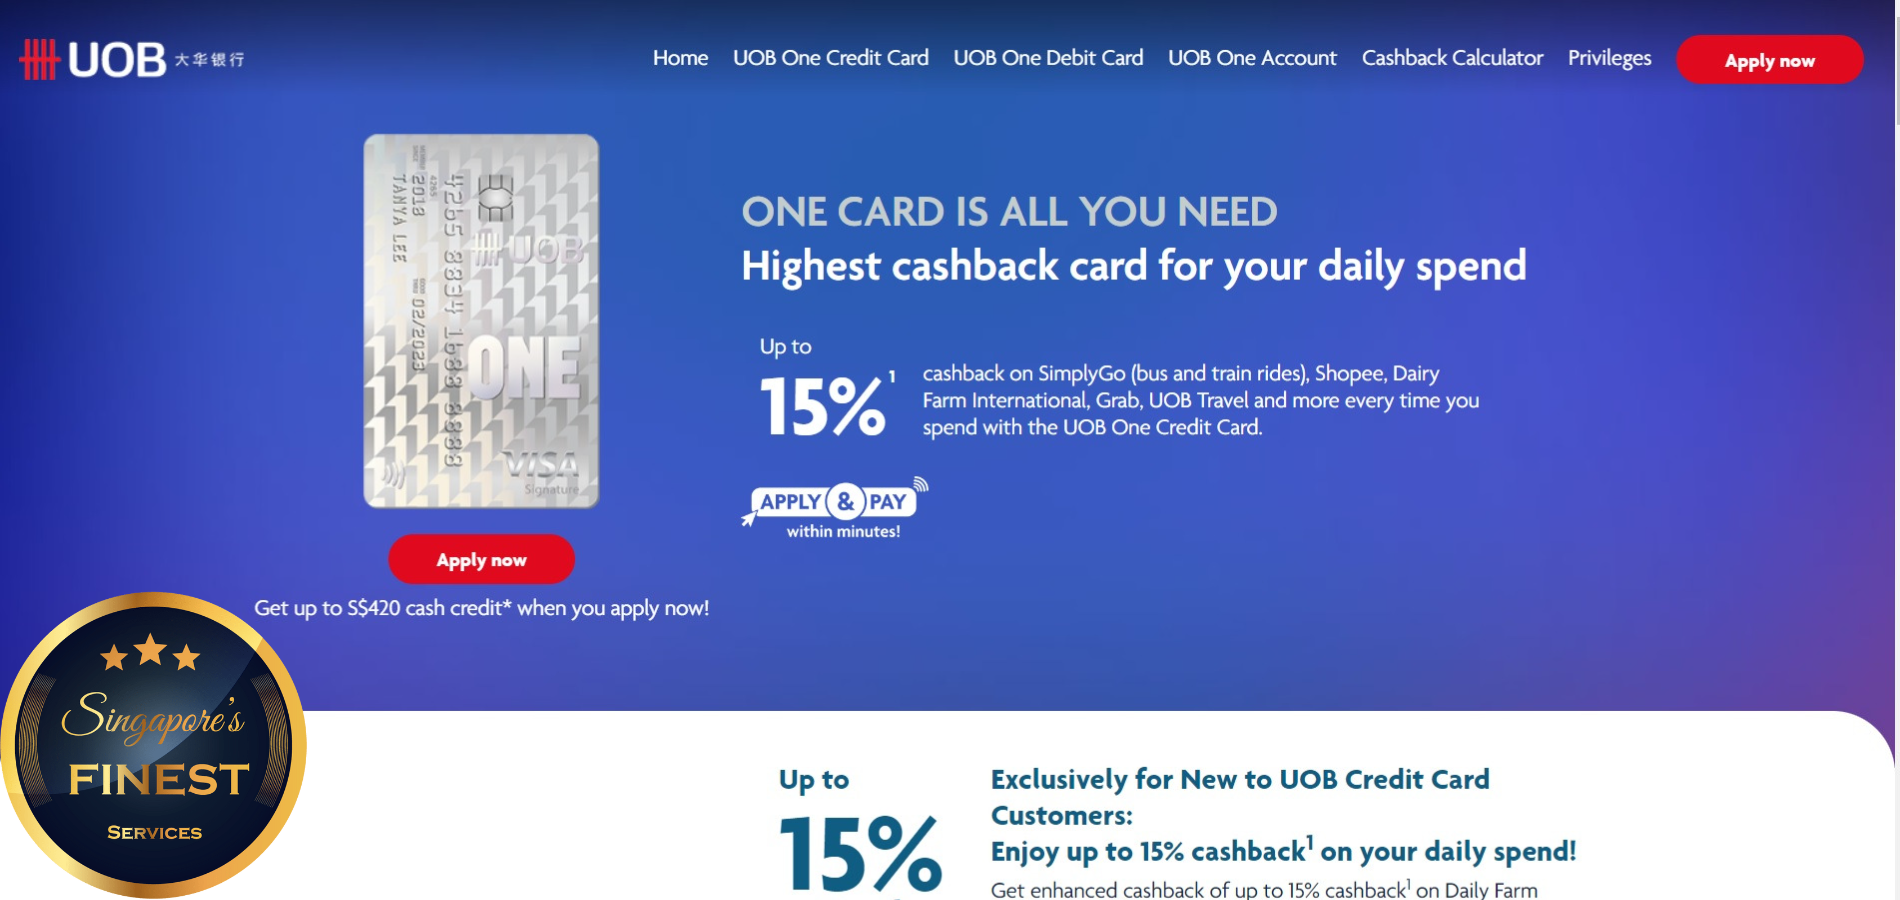 UOB One Credit Card - Credit Cards Singapore